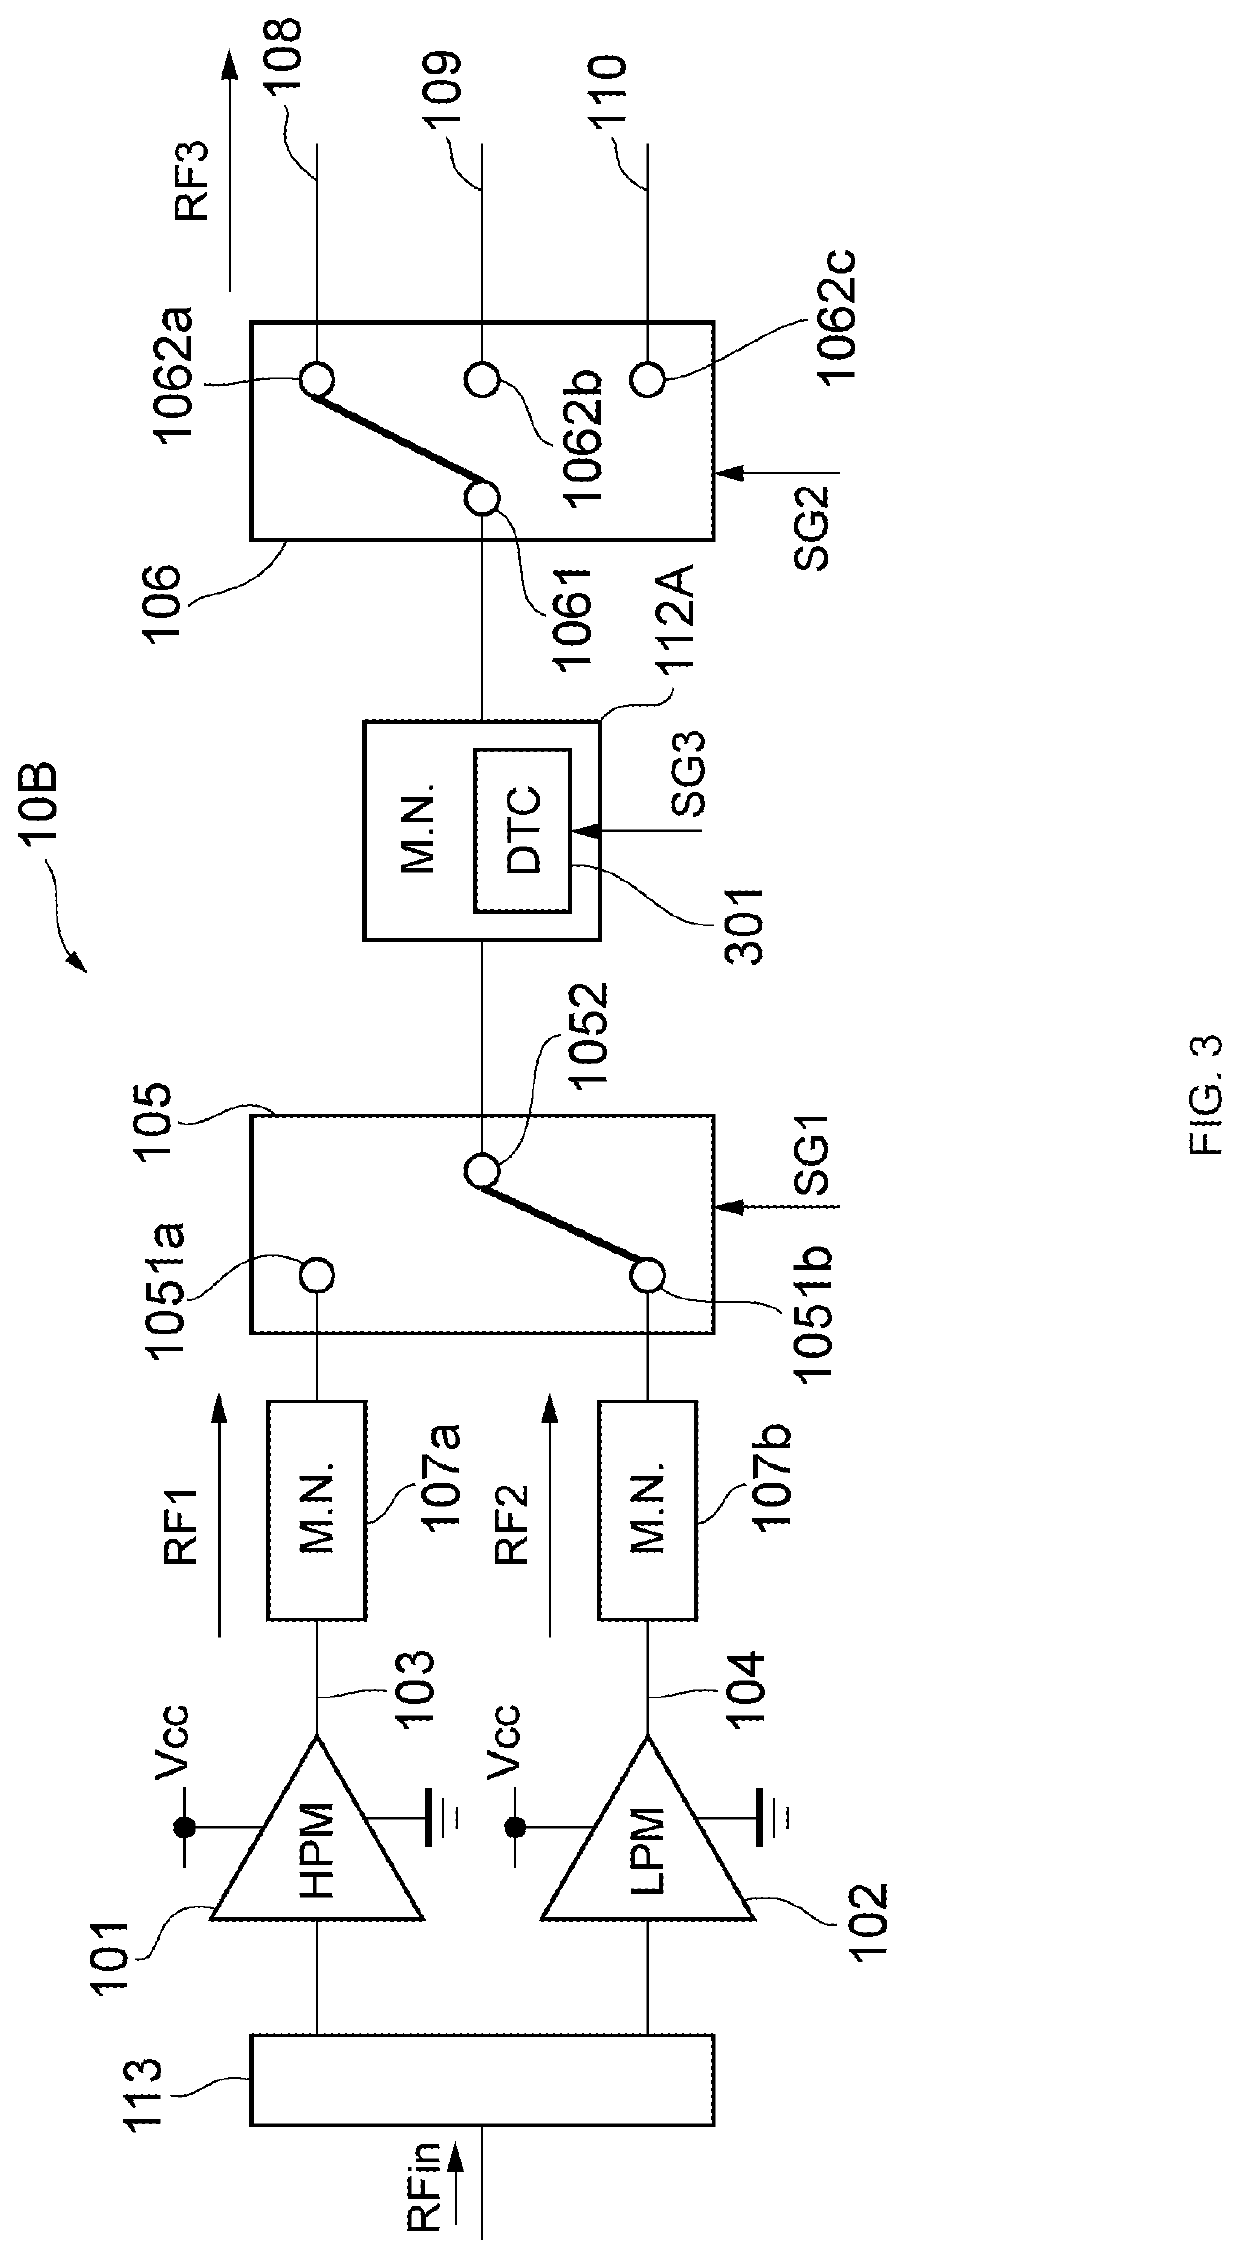 Power amplifier circuit